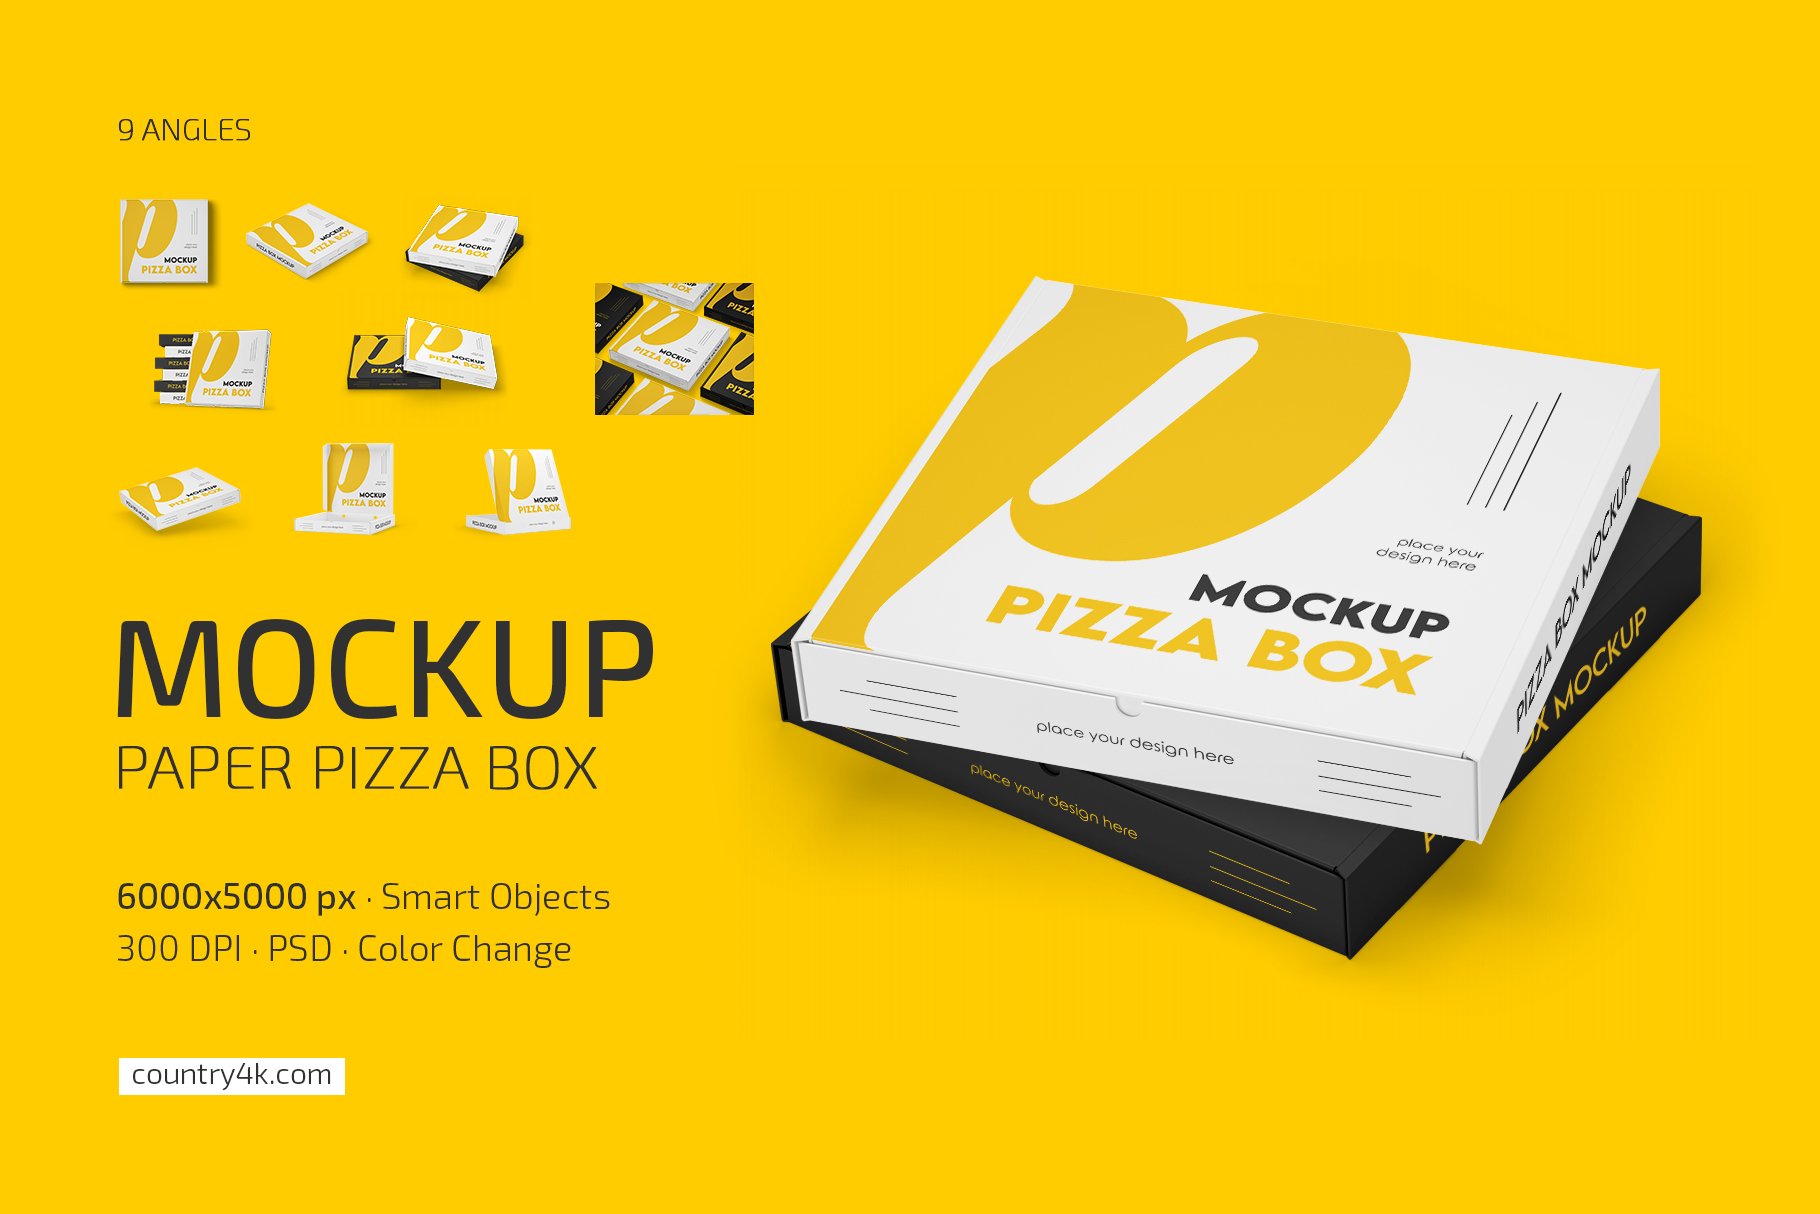 Paper Pizza Box Mockup Set cover image.